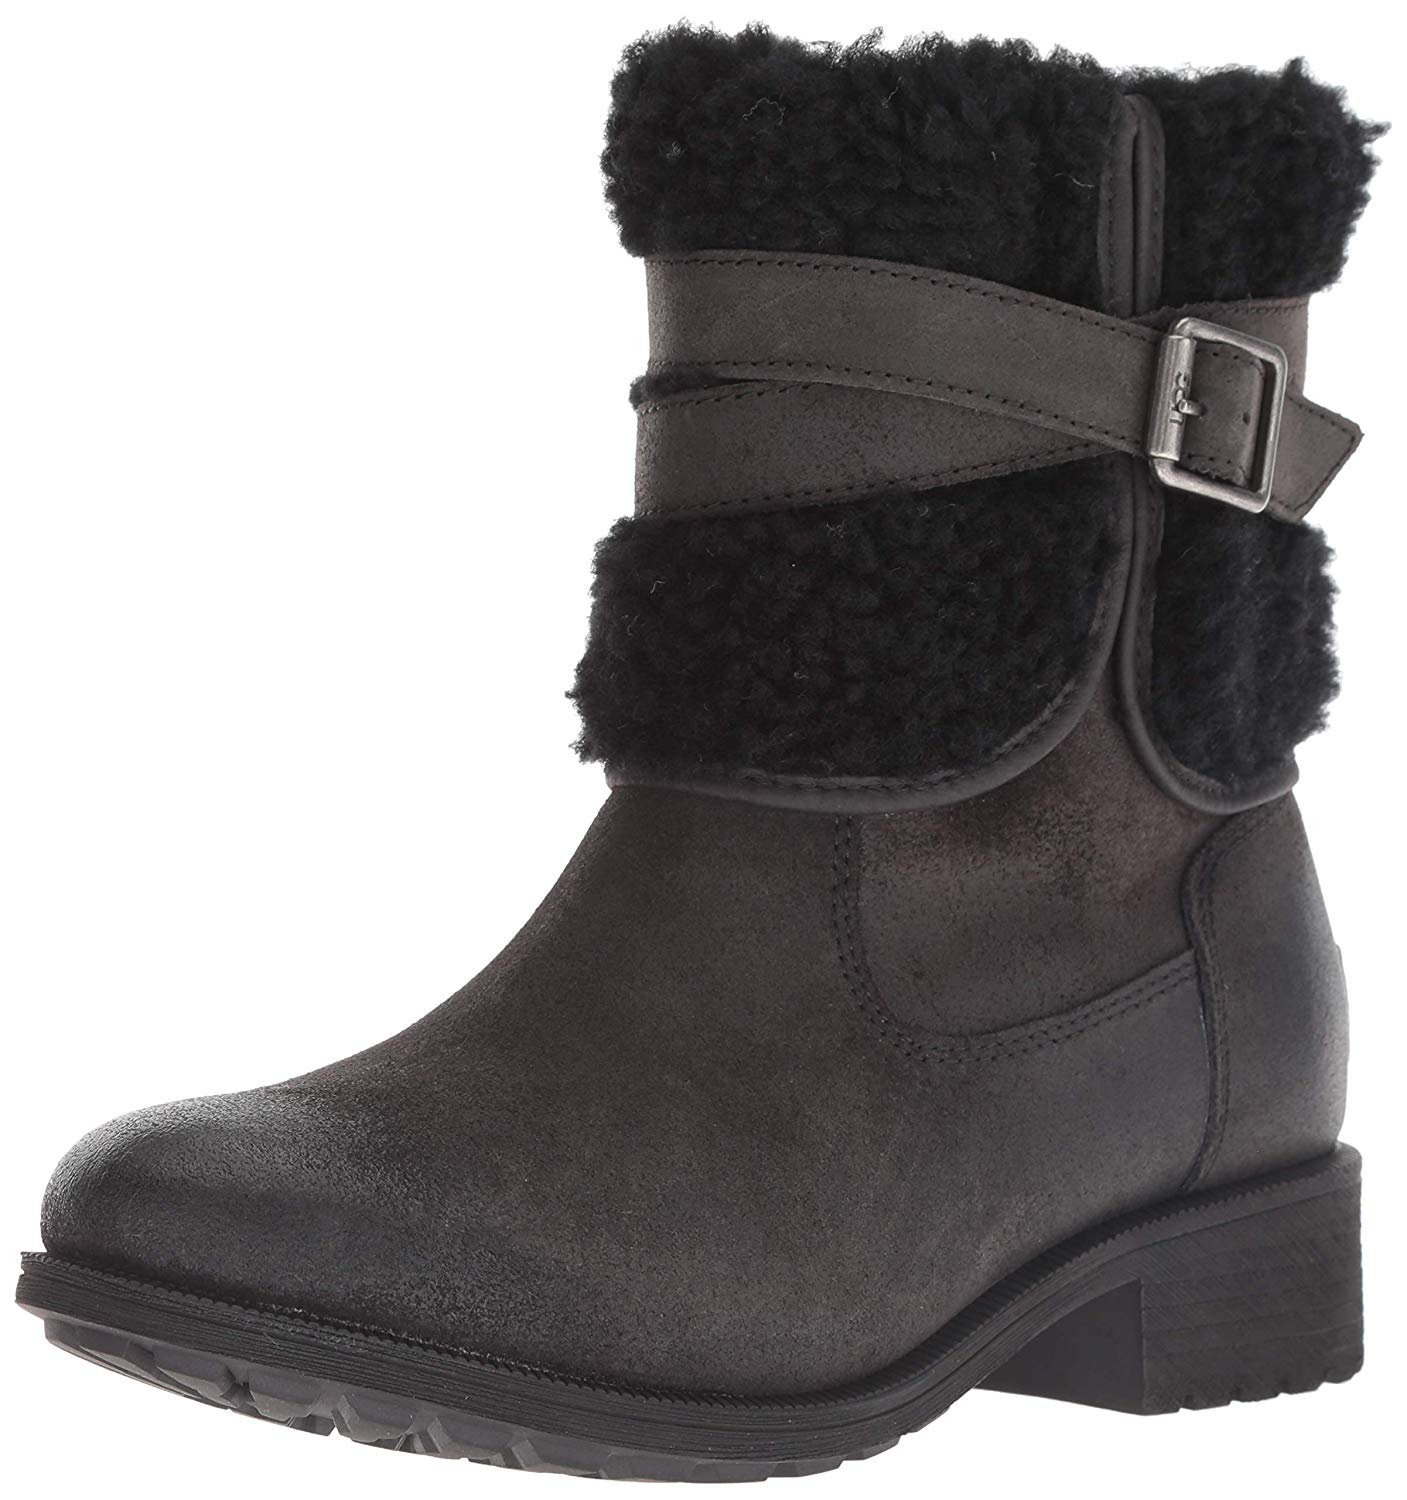 UGG Women's W Blayre III Fashion Boot, Black, Size 8.5 Xqn4 | eBay